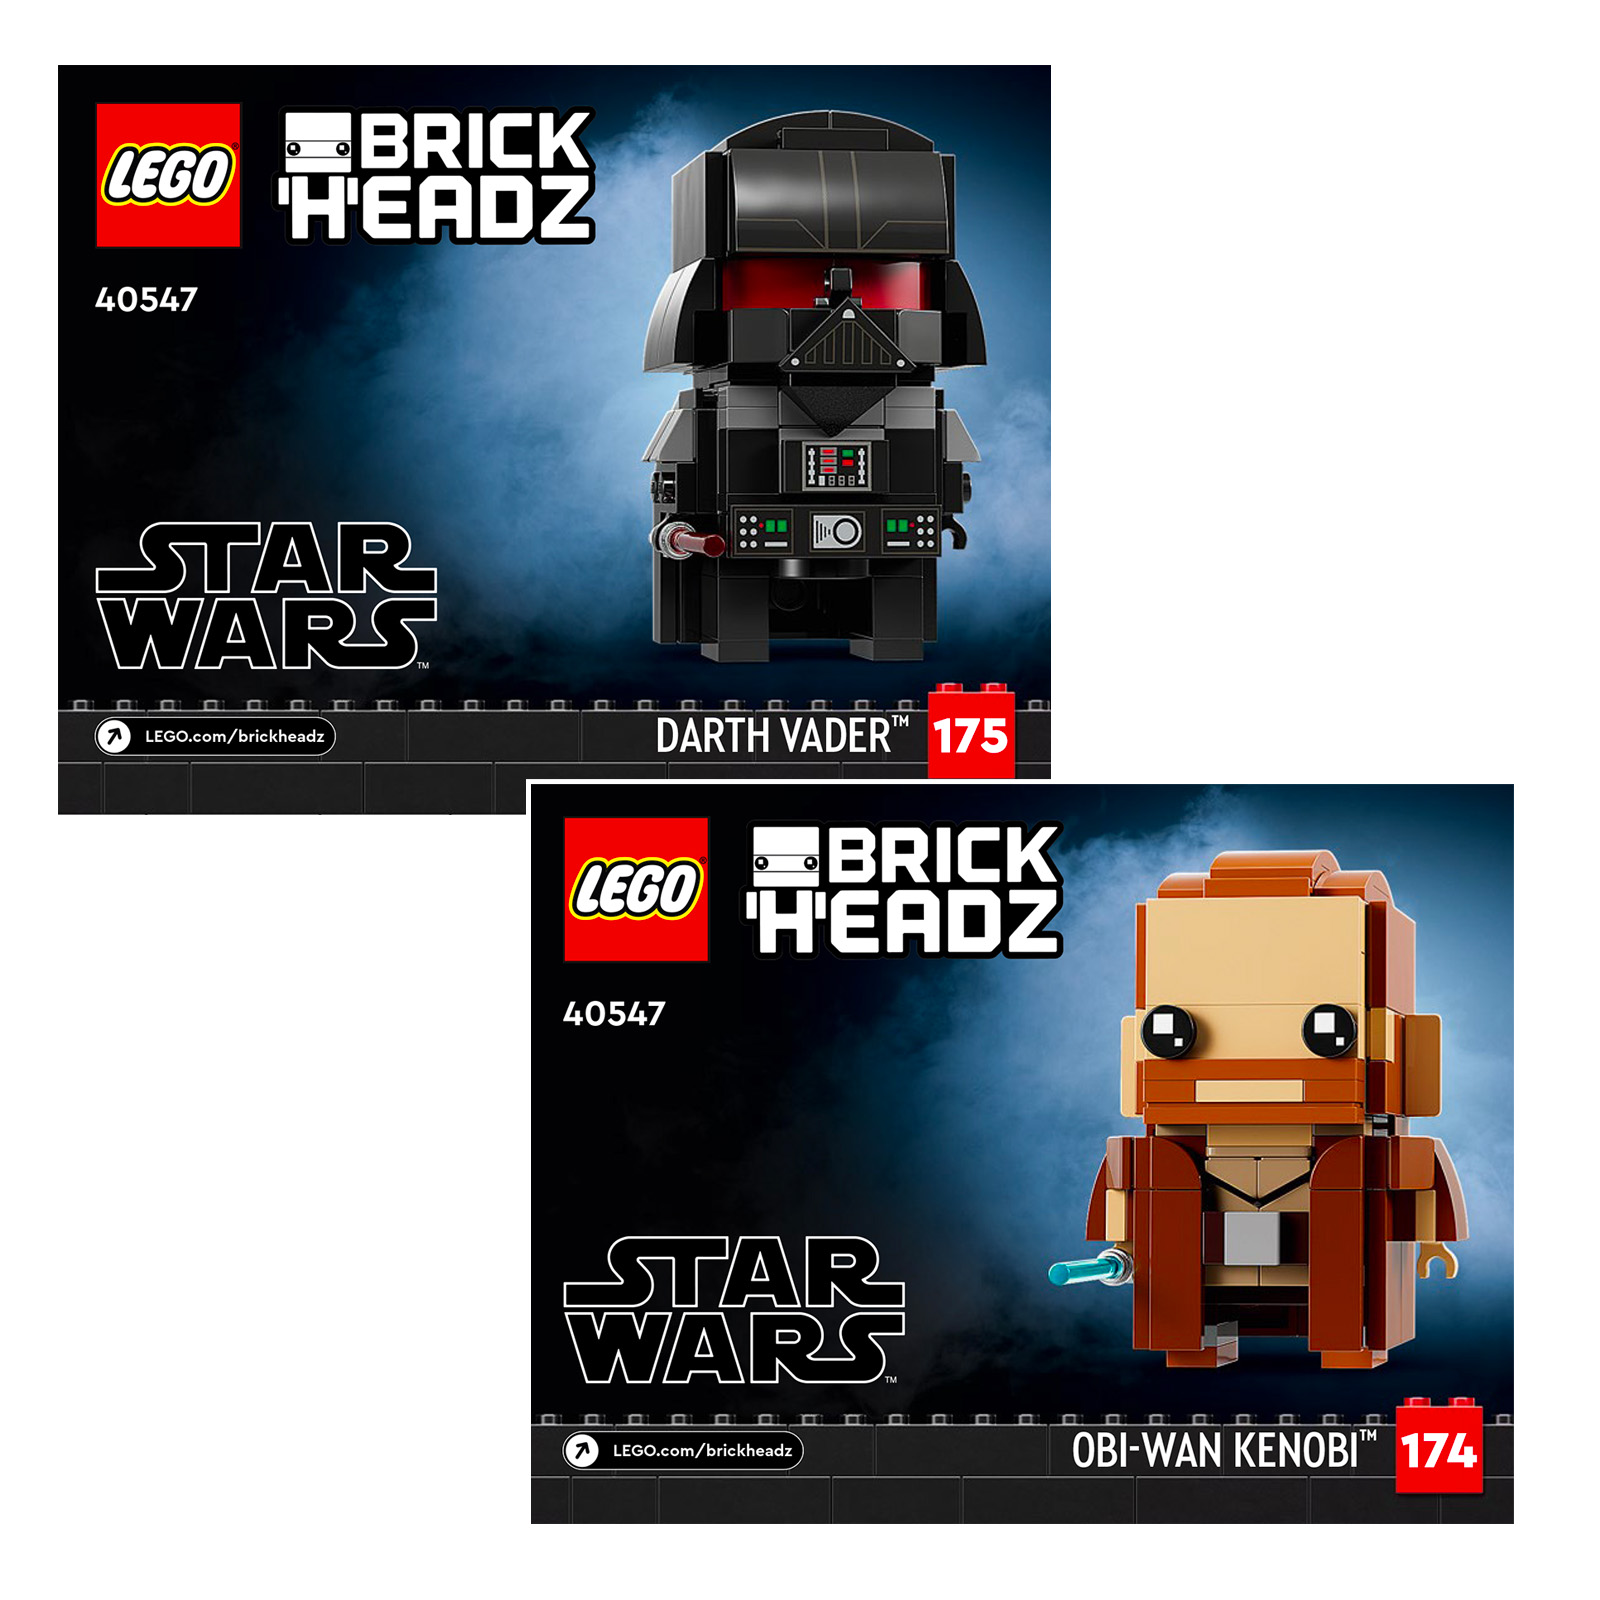 LEGO Star Wars BrickHeadz 40547 Obi-Wan Kenobi & Darth Vader: Hình ảnh đầu tiên